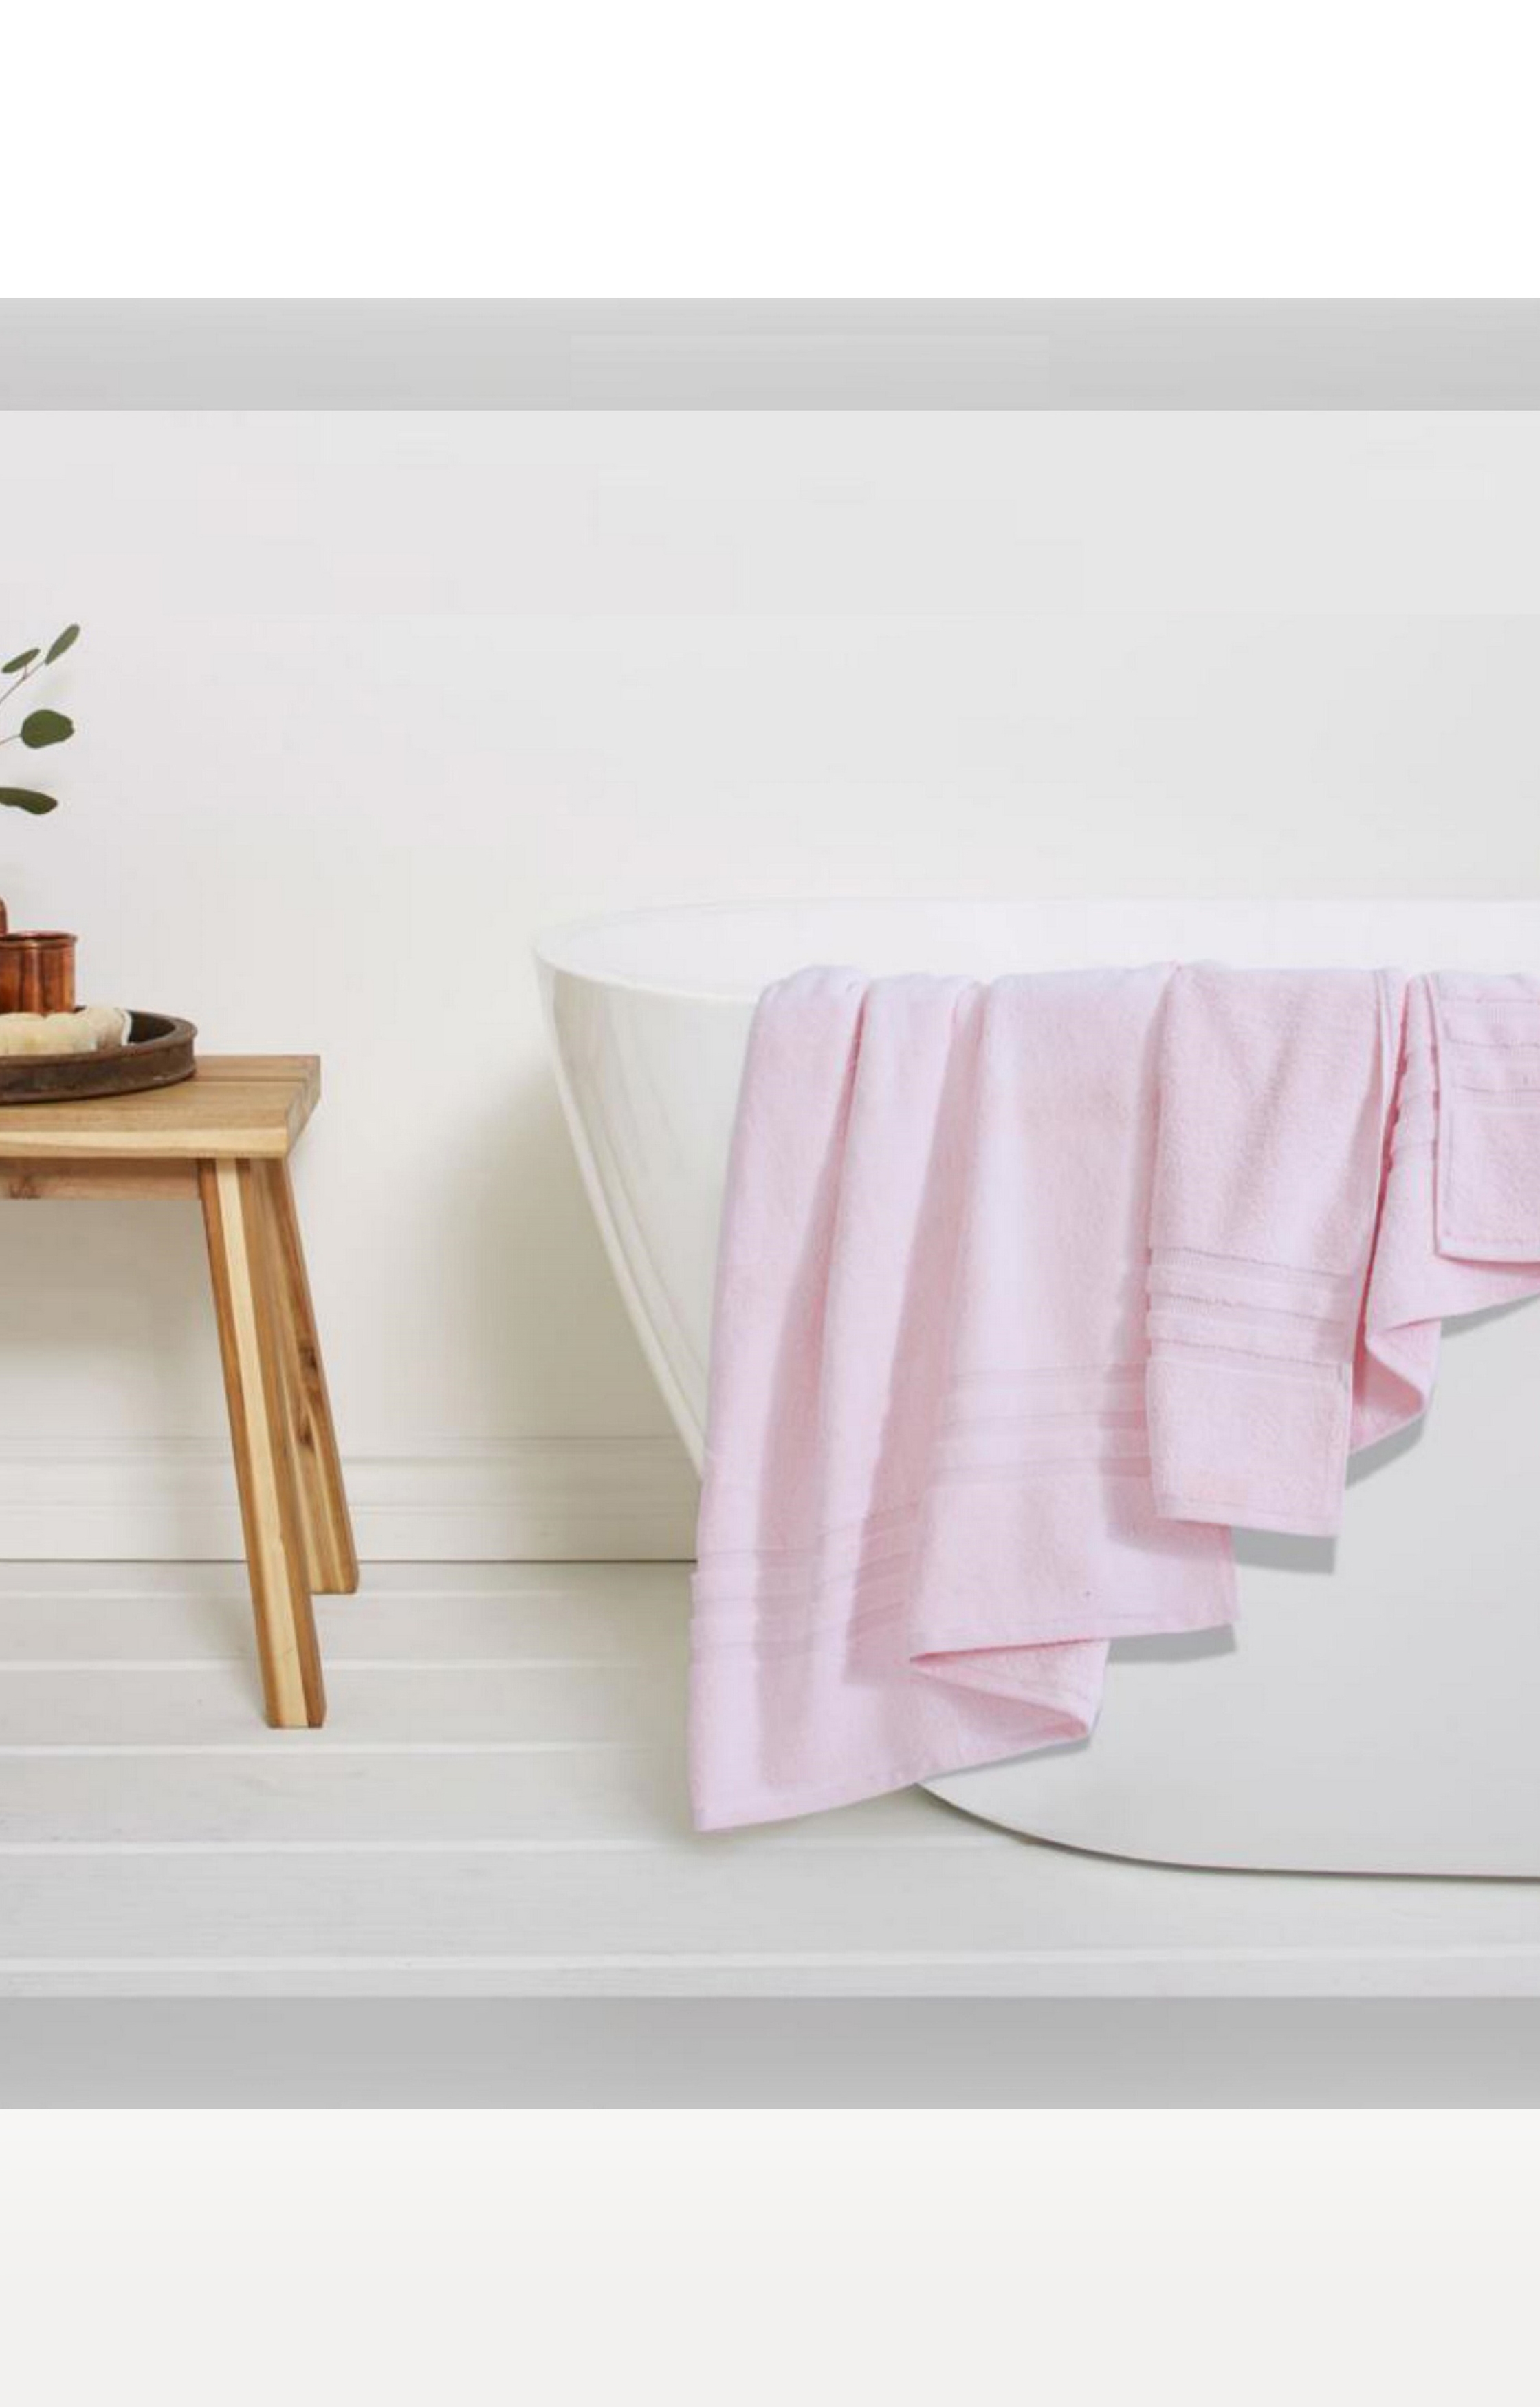 Sita Fabrics | Sita Fabrics Premium Cotton Super Soft Zero Twist Yarn Very Airy 600 GSM Bath Towel - Pink